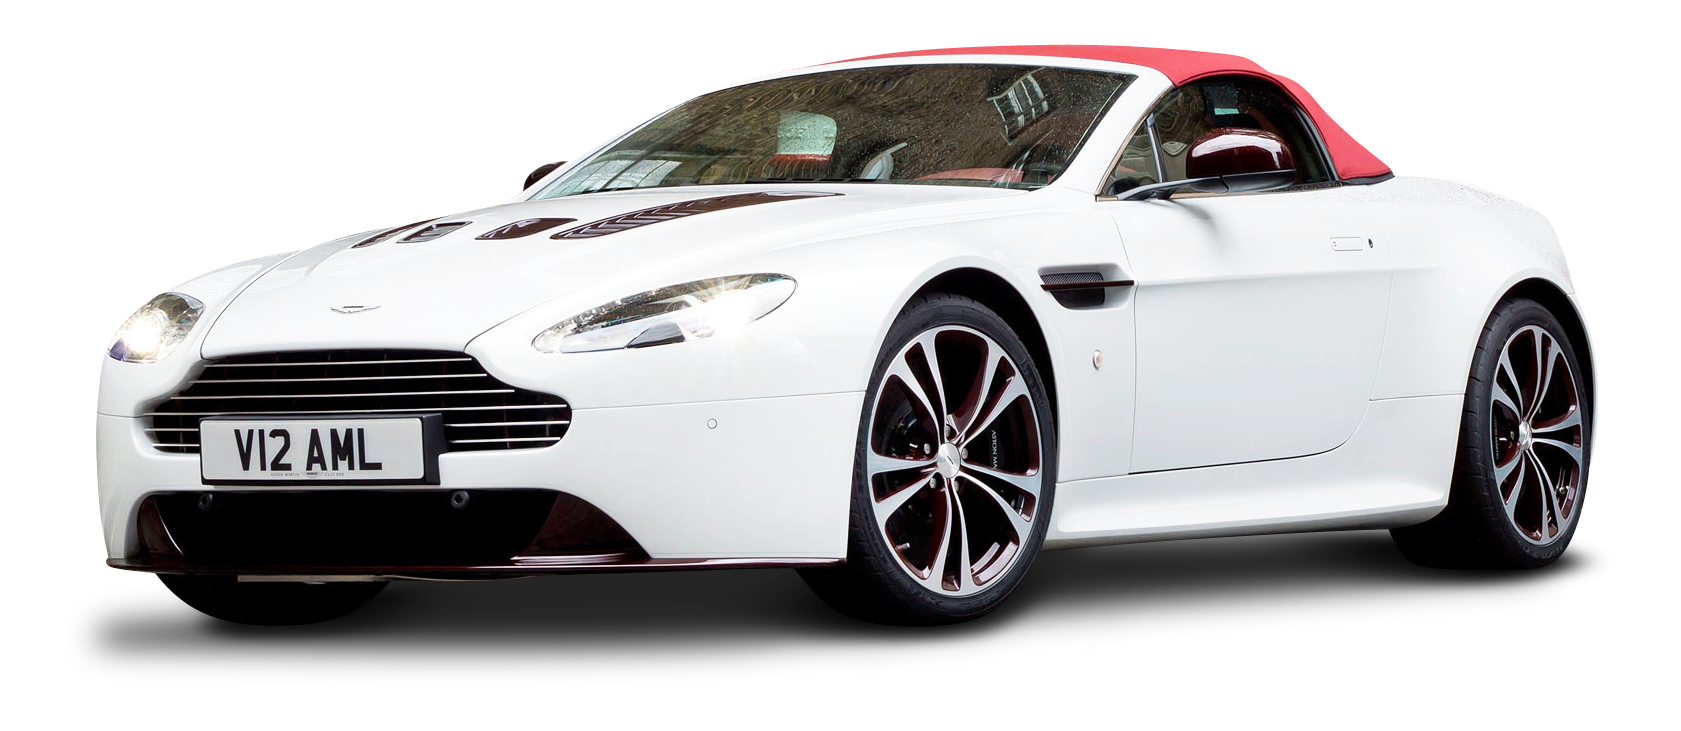 Aston Martin Vantage V12 Sports Car